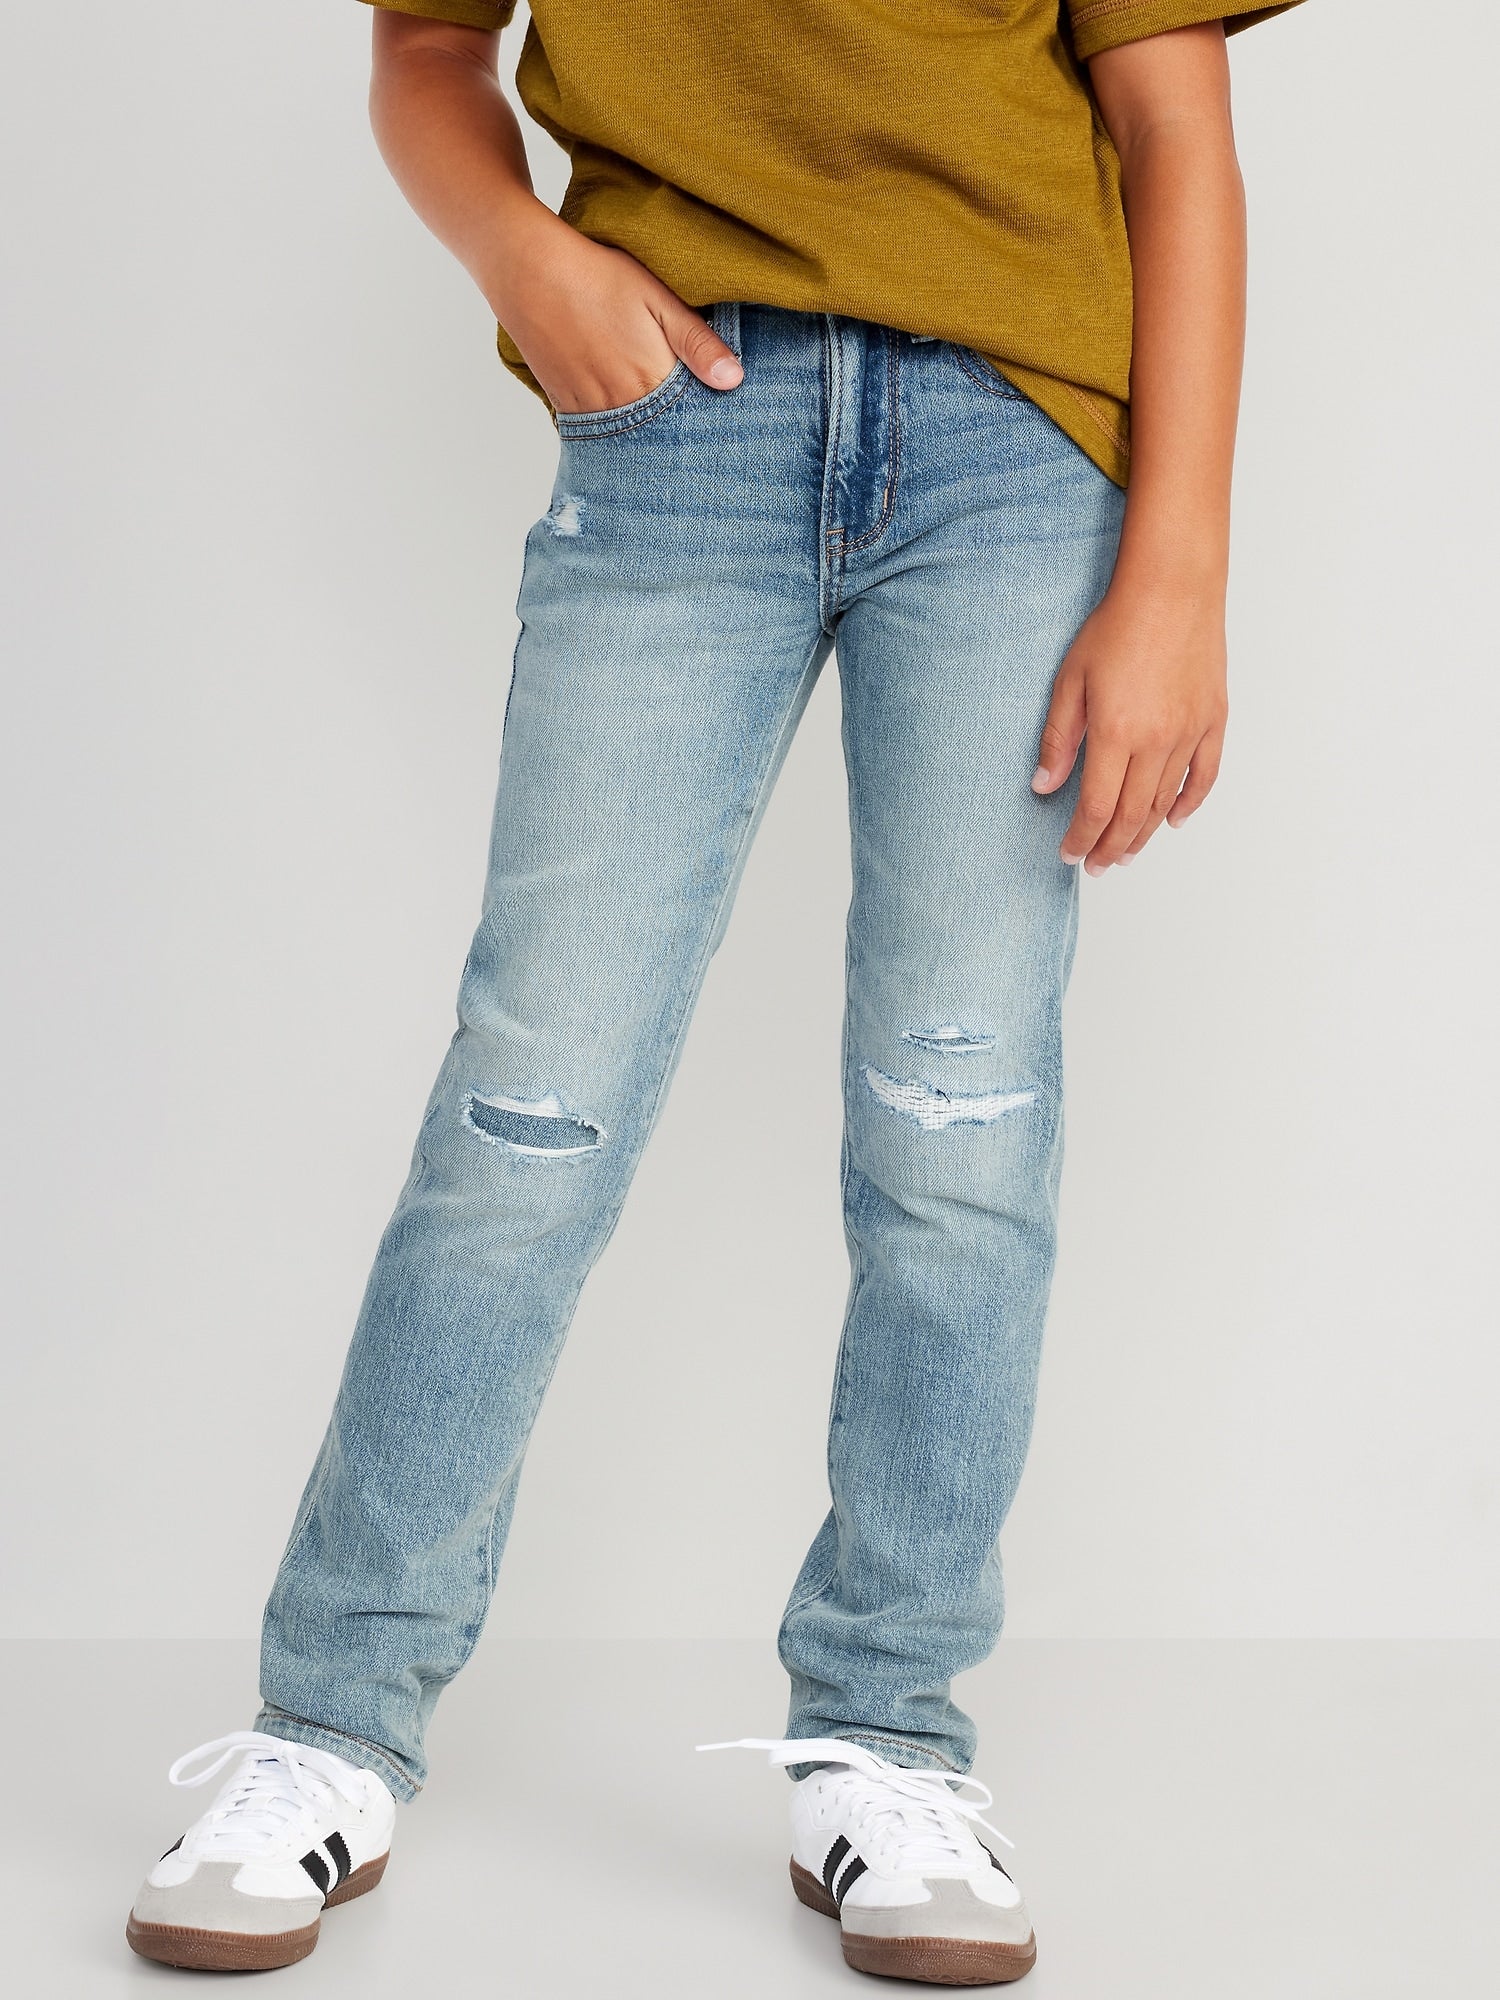 Latest Stylish Jeans Pants For Kids 2020-2021/ Boys Jeans Design Ideas/Kids  Denim Jeans | Kids denim jeans, Kids jeans boys, Stylish jeans